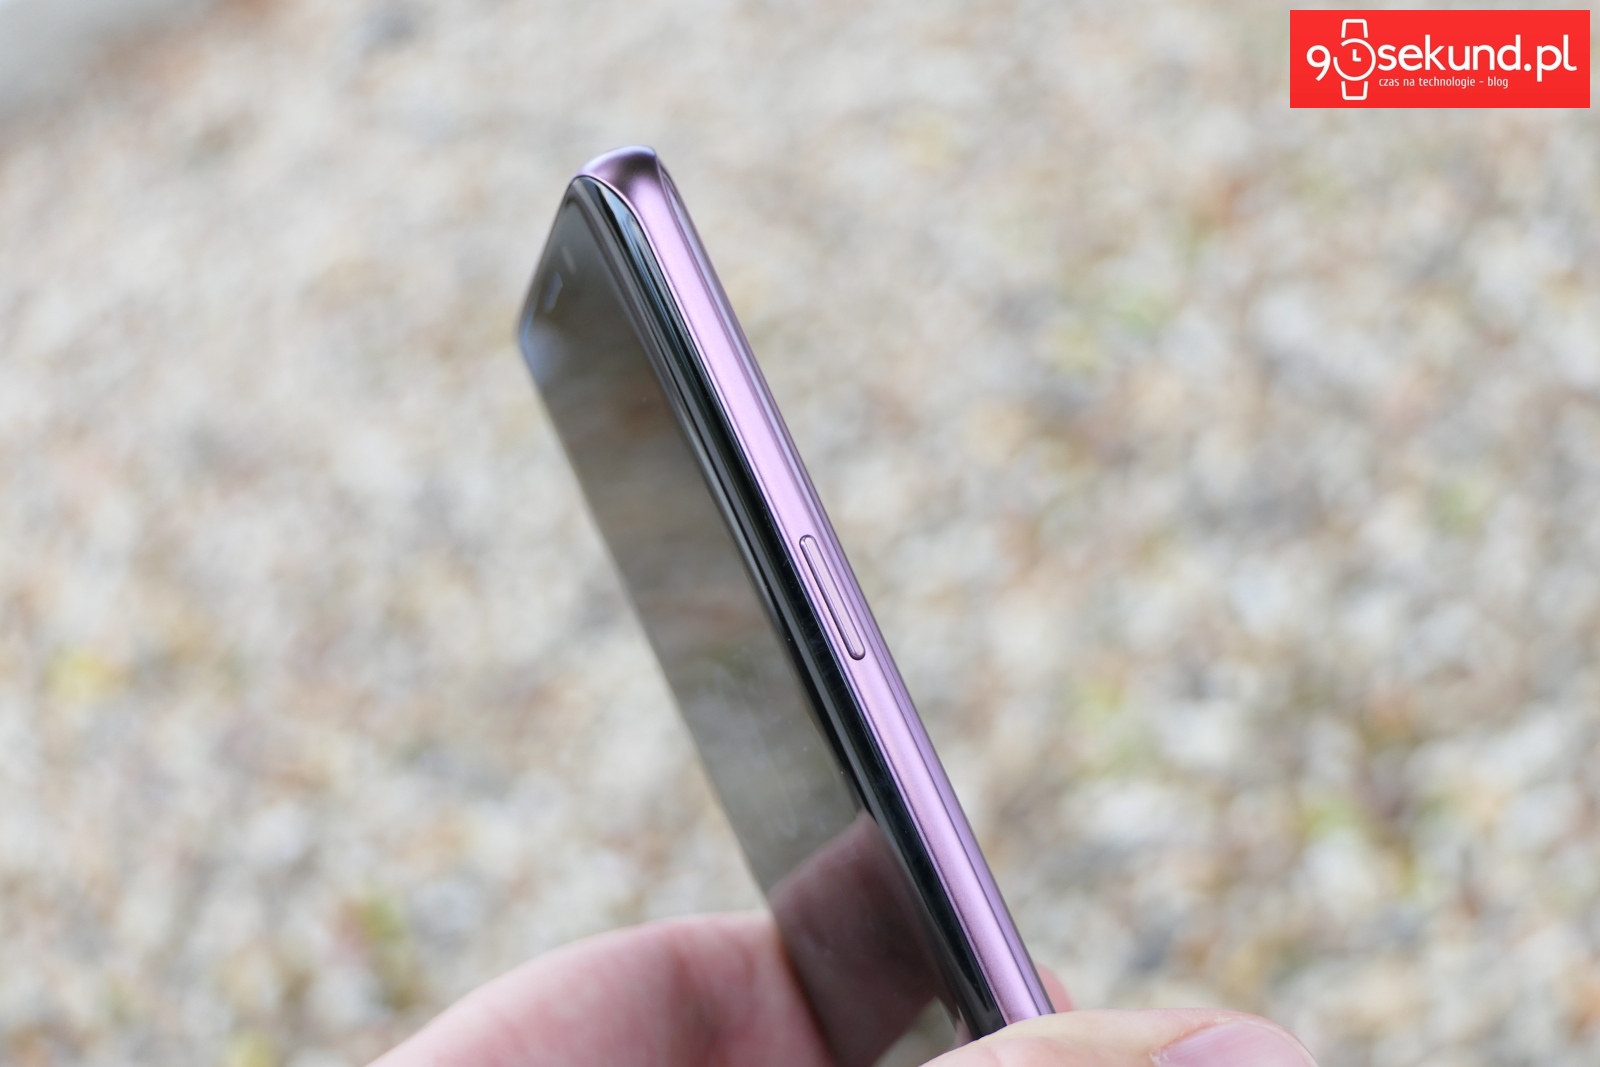 Recenzja Samsung Galaxy S9 (SM-G960F) - 90sekund.pl - Michał Brożyński